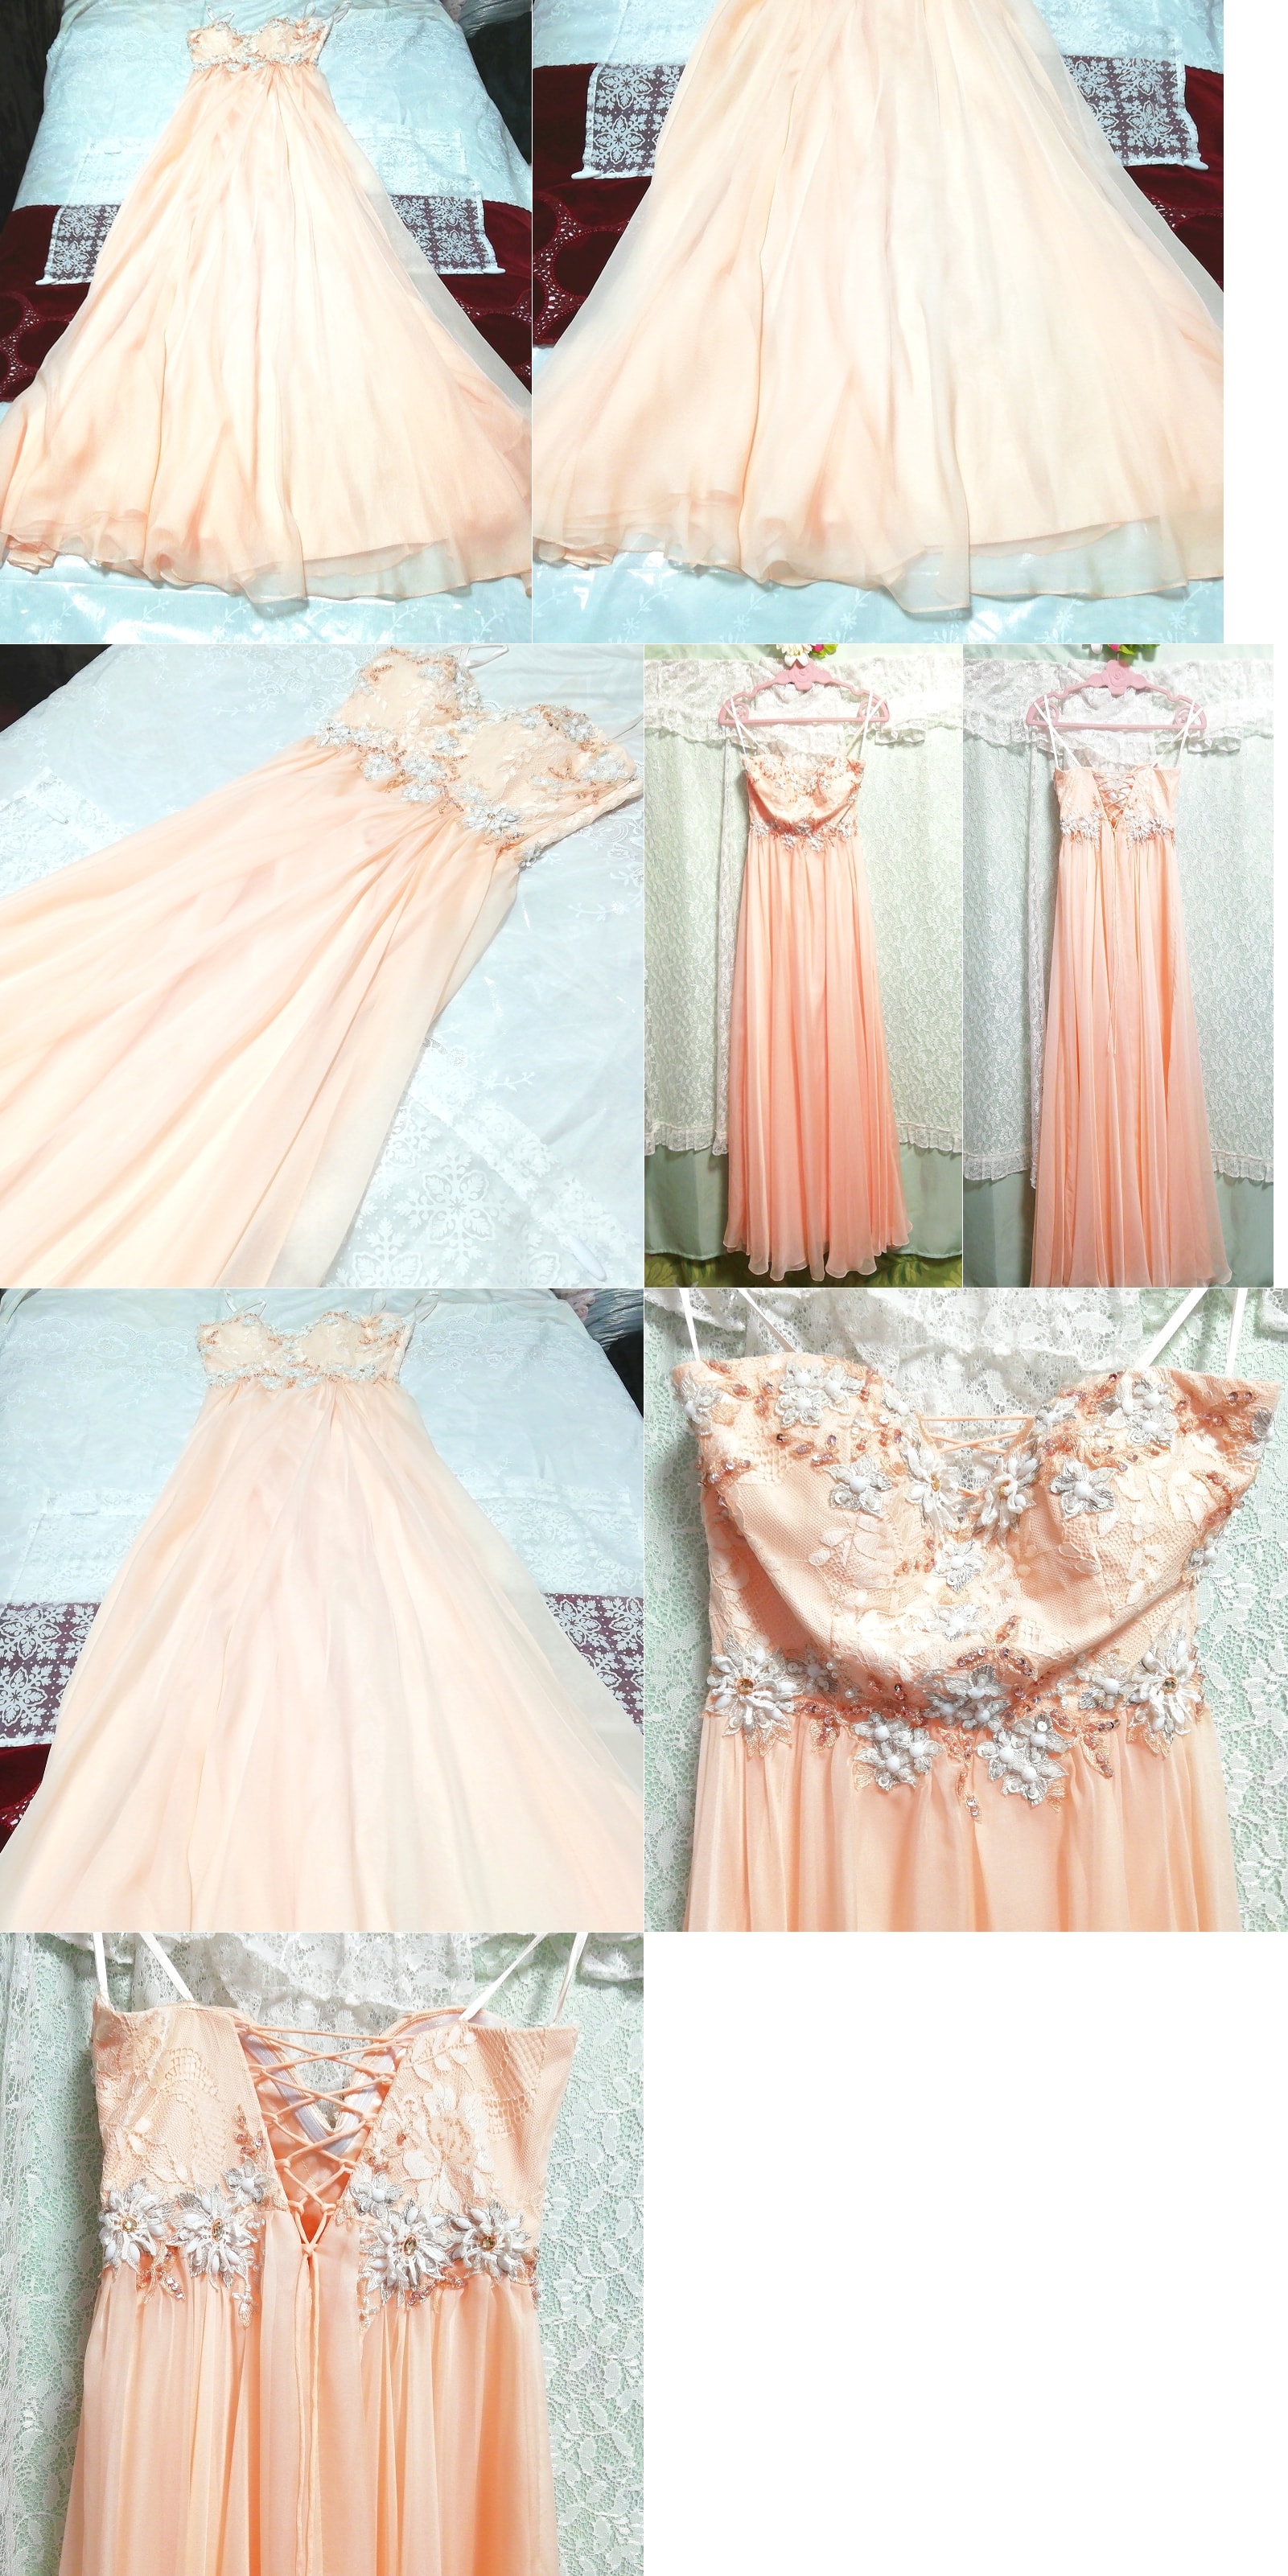 Luxurious cherry blossom pink chiffon negligee nightgown camisole maxi dress, long skirt, m size